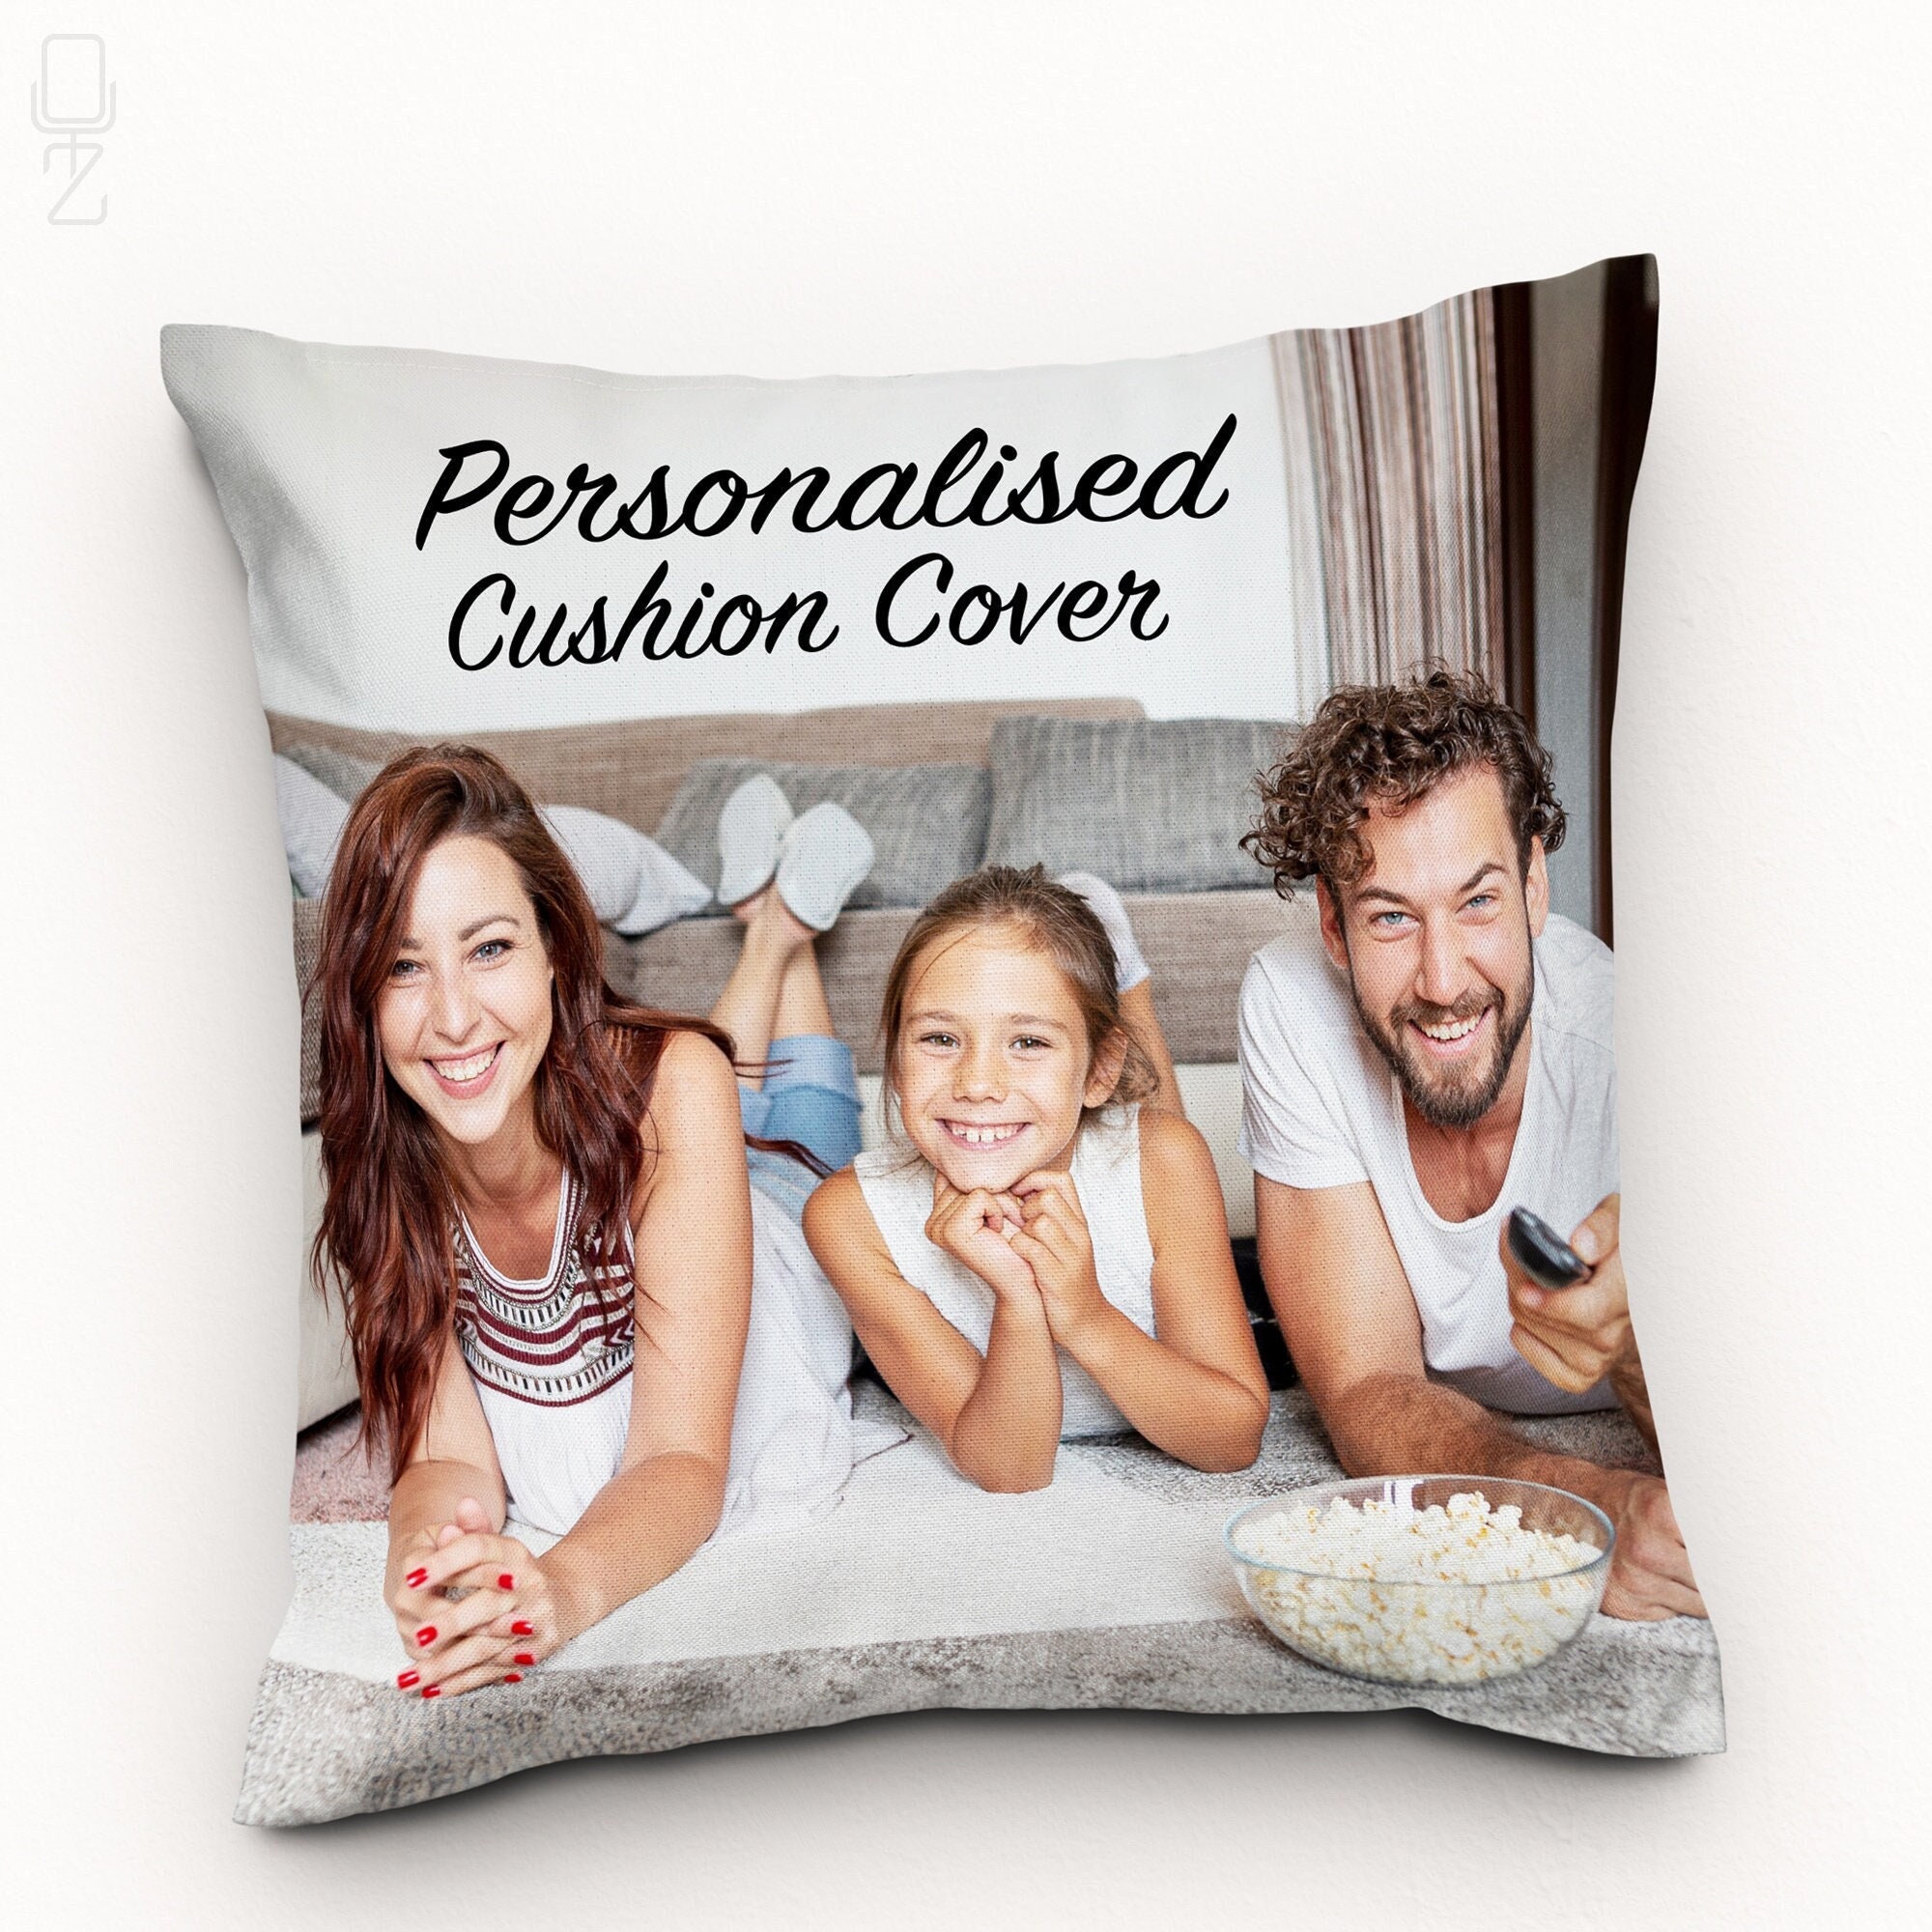 Man Face Pillow Cover Game Soft Pillow Case Cushion Cover Cute